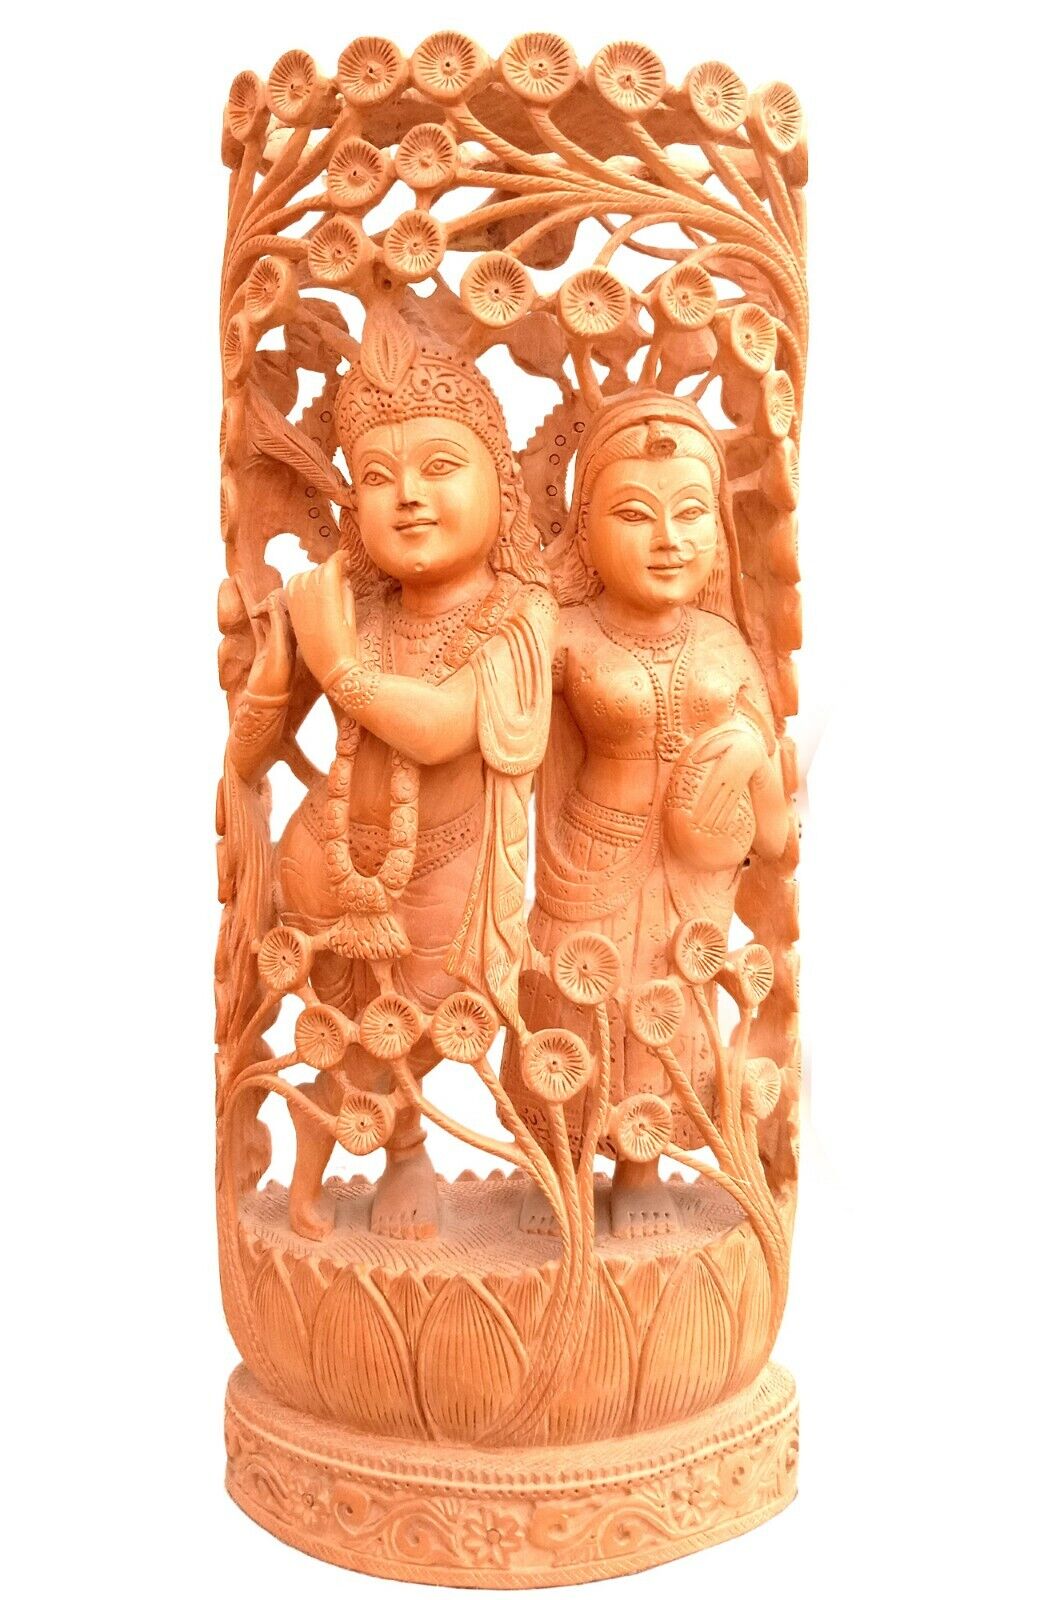 15 Inch Wooden Carved Radha Krishna sculpture Idols statue figurine handmade art